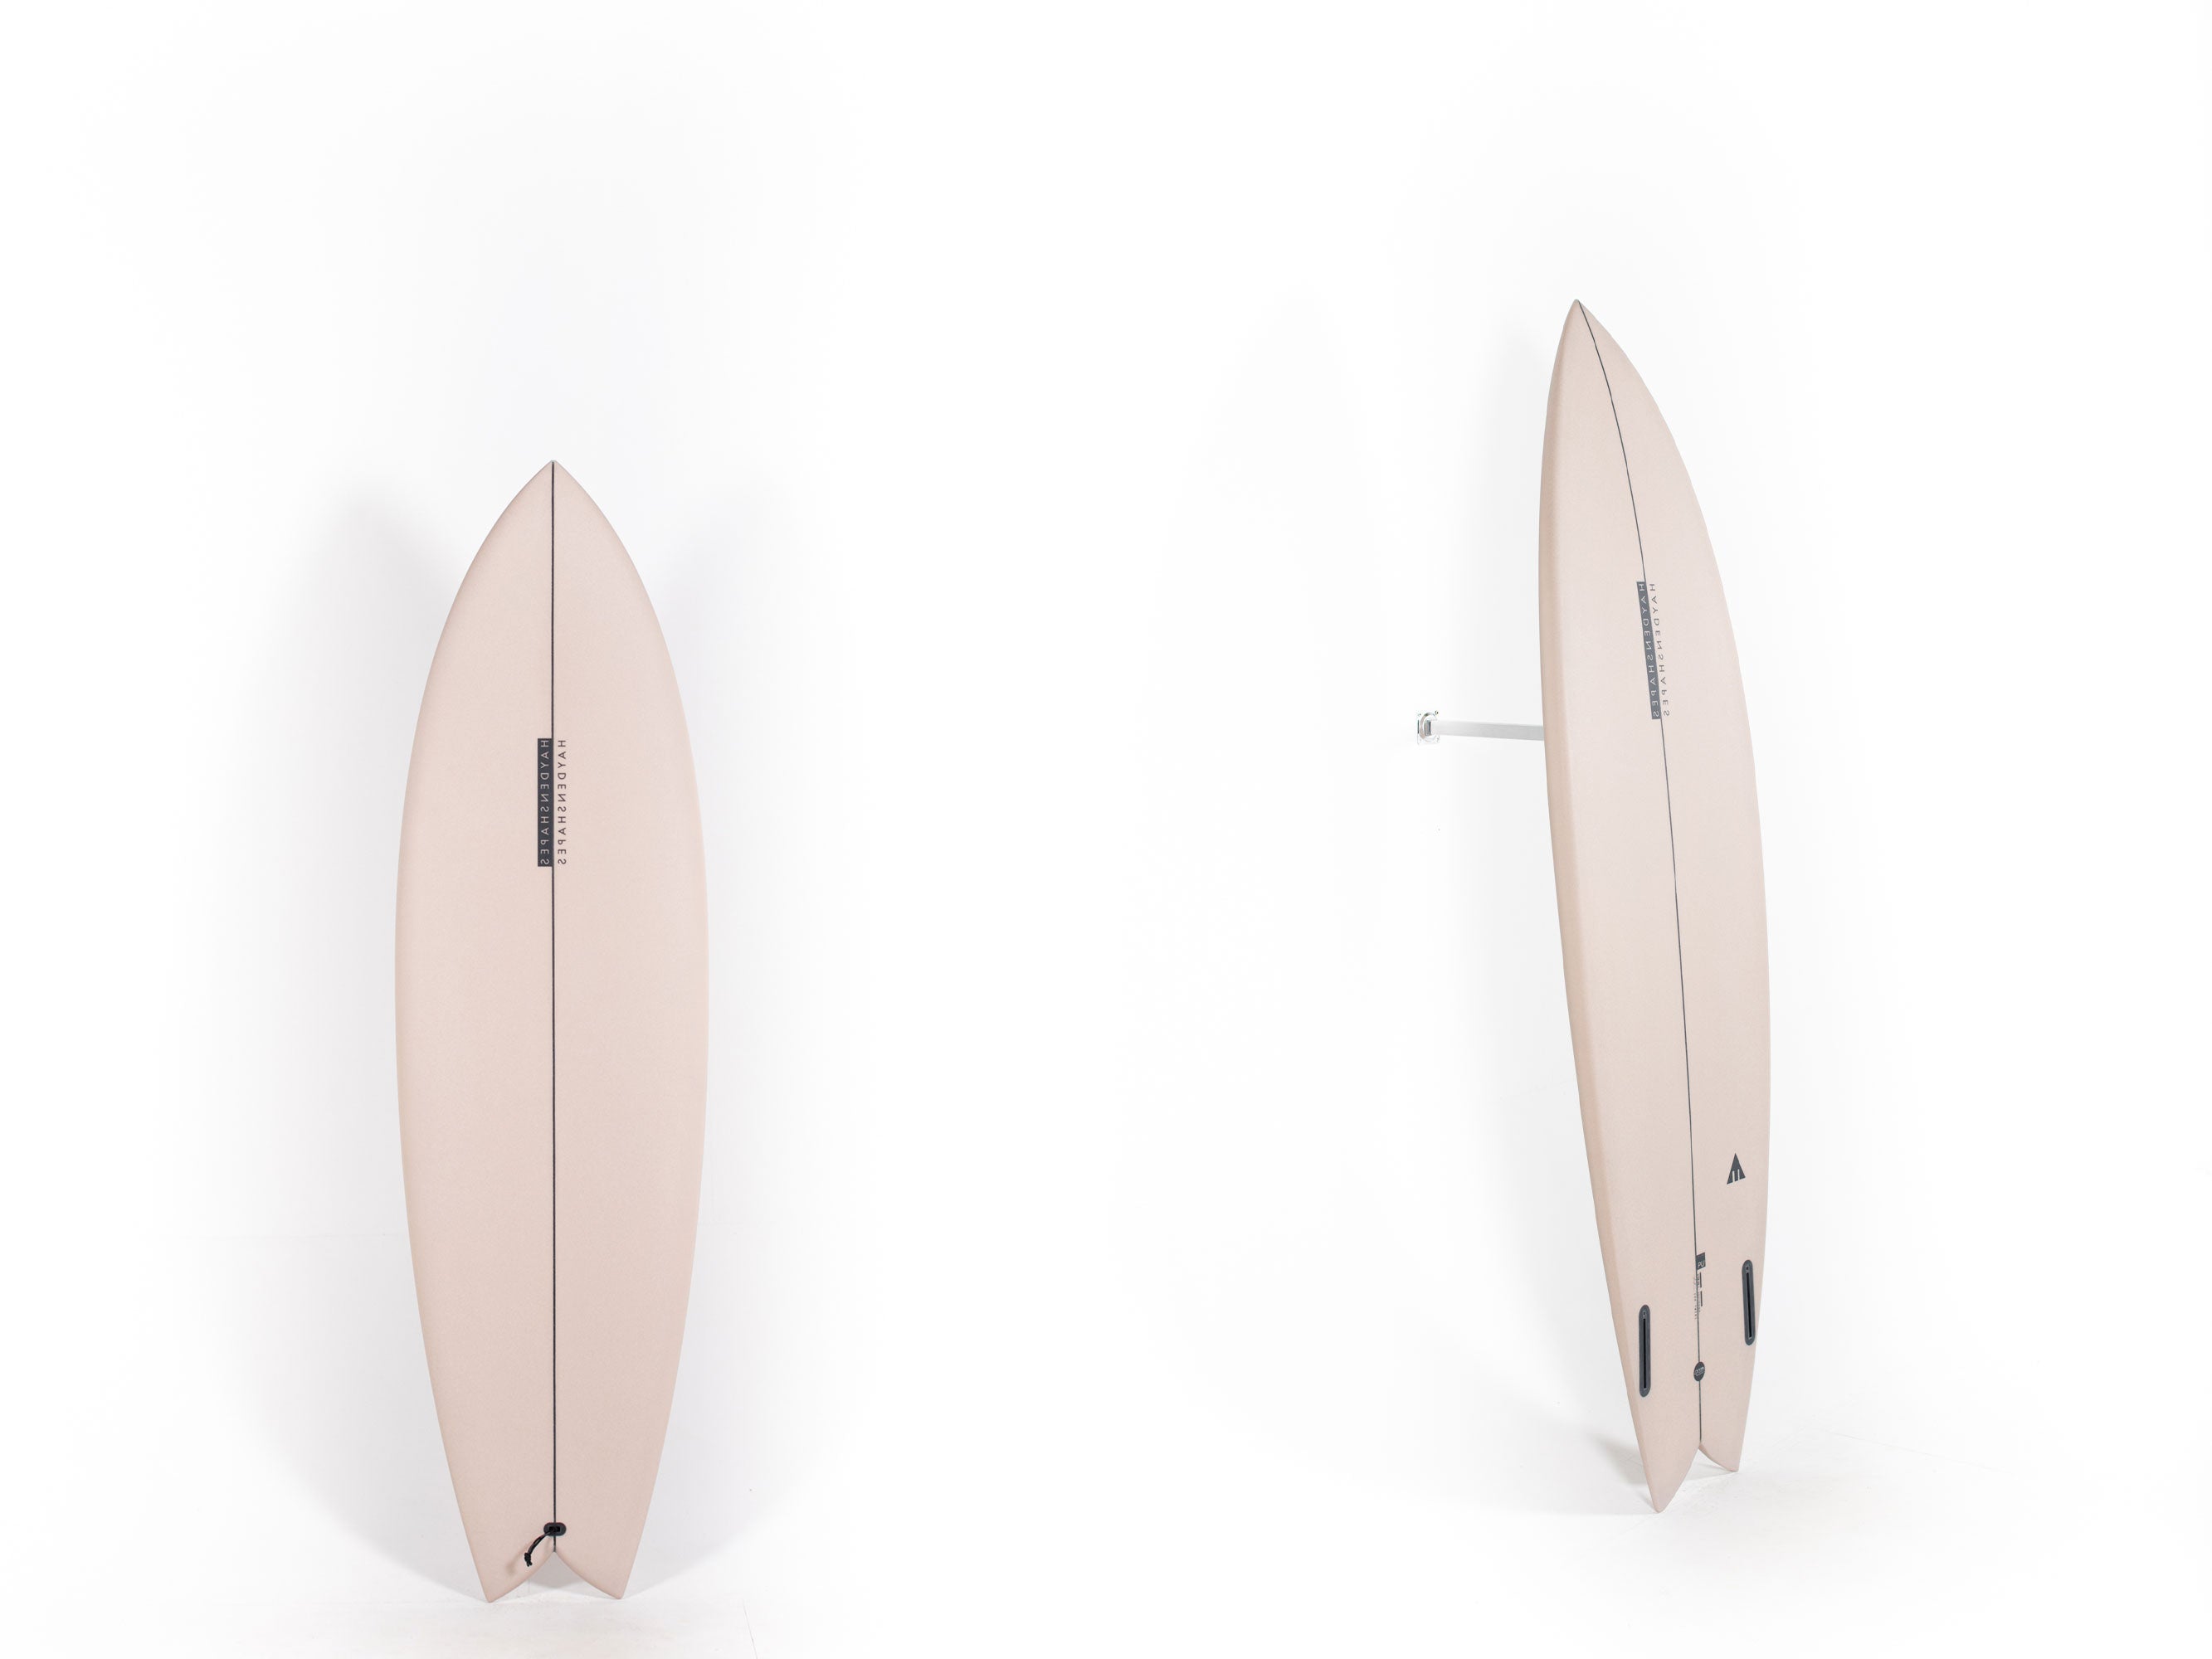 HaydenShapes Surfboard - HYPTO KRYPTO TWIN PU - 6'6" X 21 1/2" X 3" - 45.8L